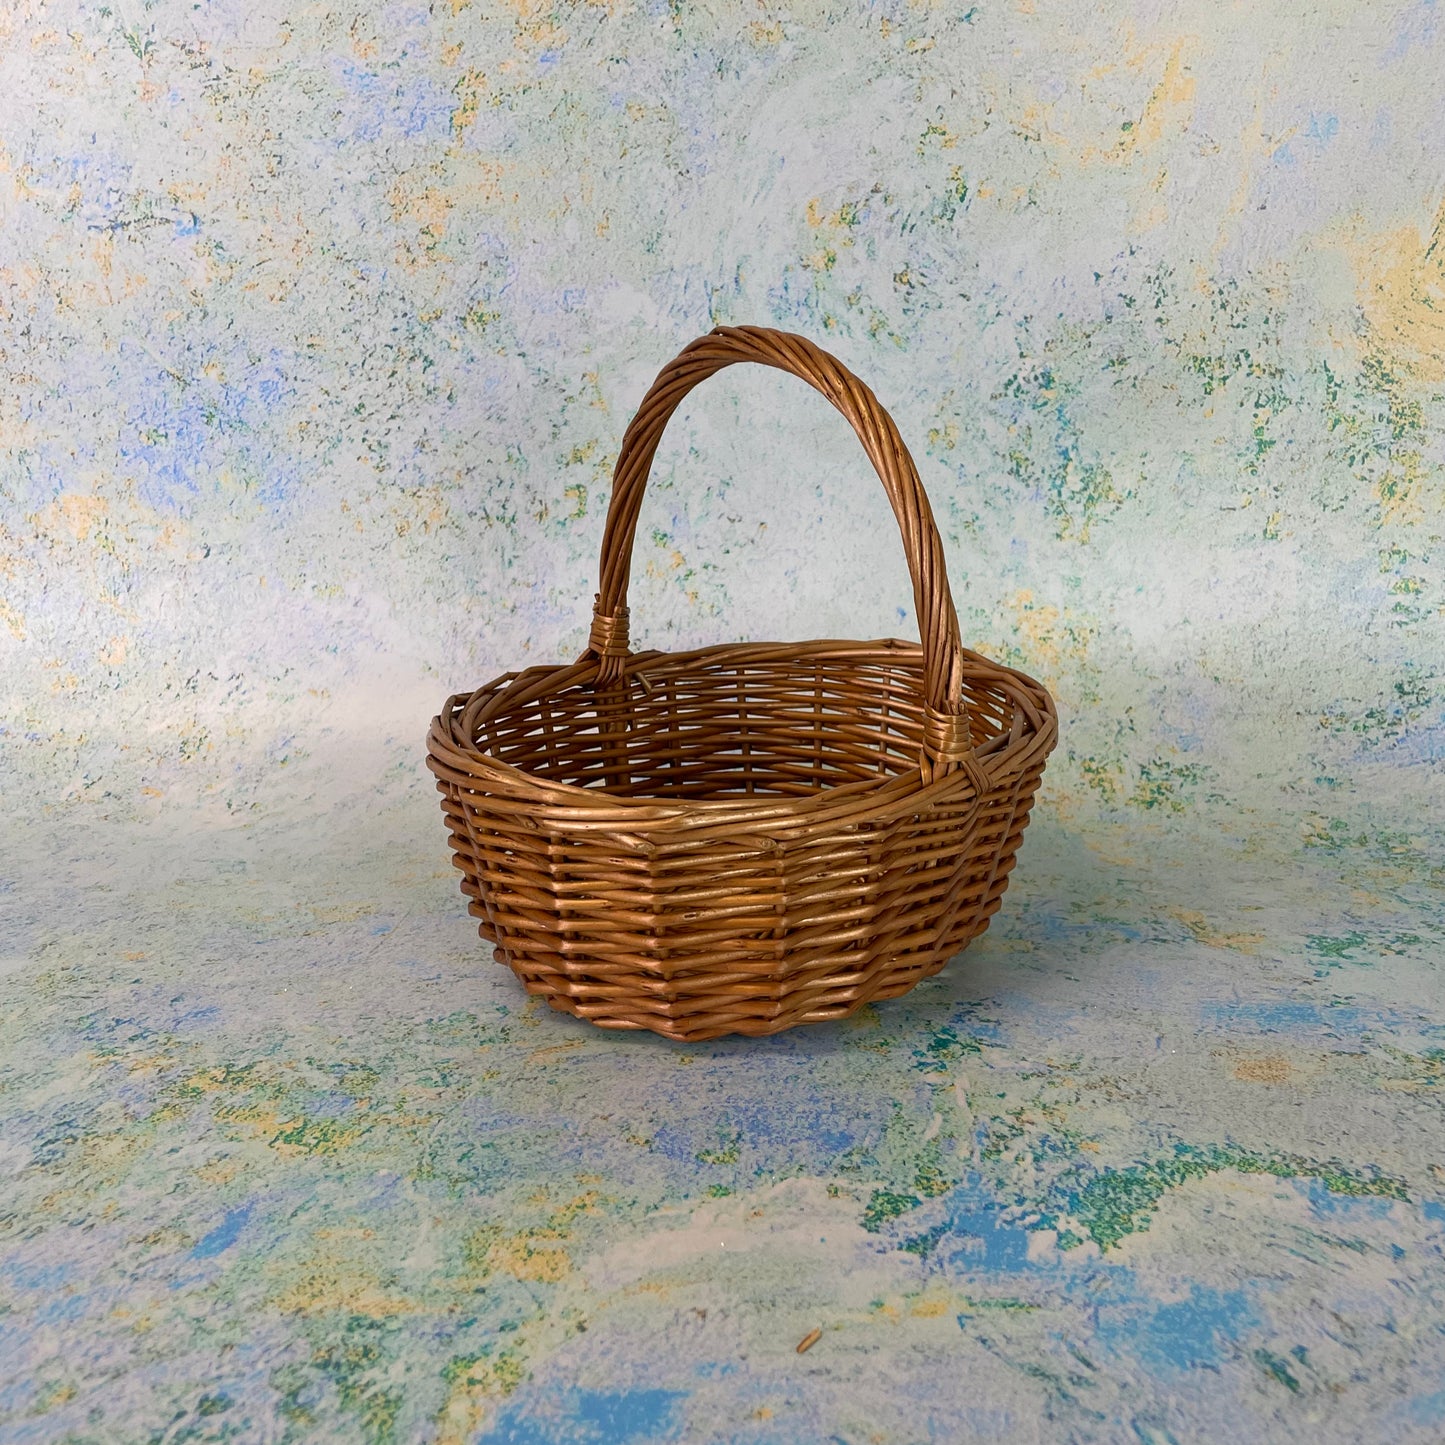 Small Easter Egg Hunt Basket - Brown Wicker